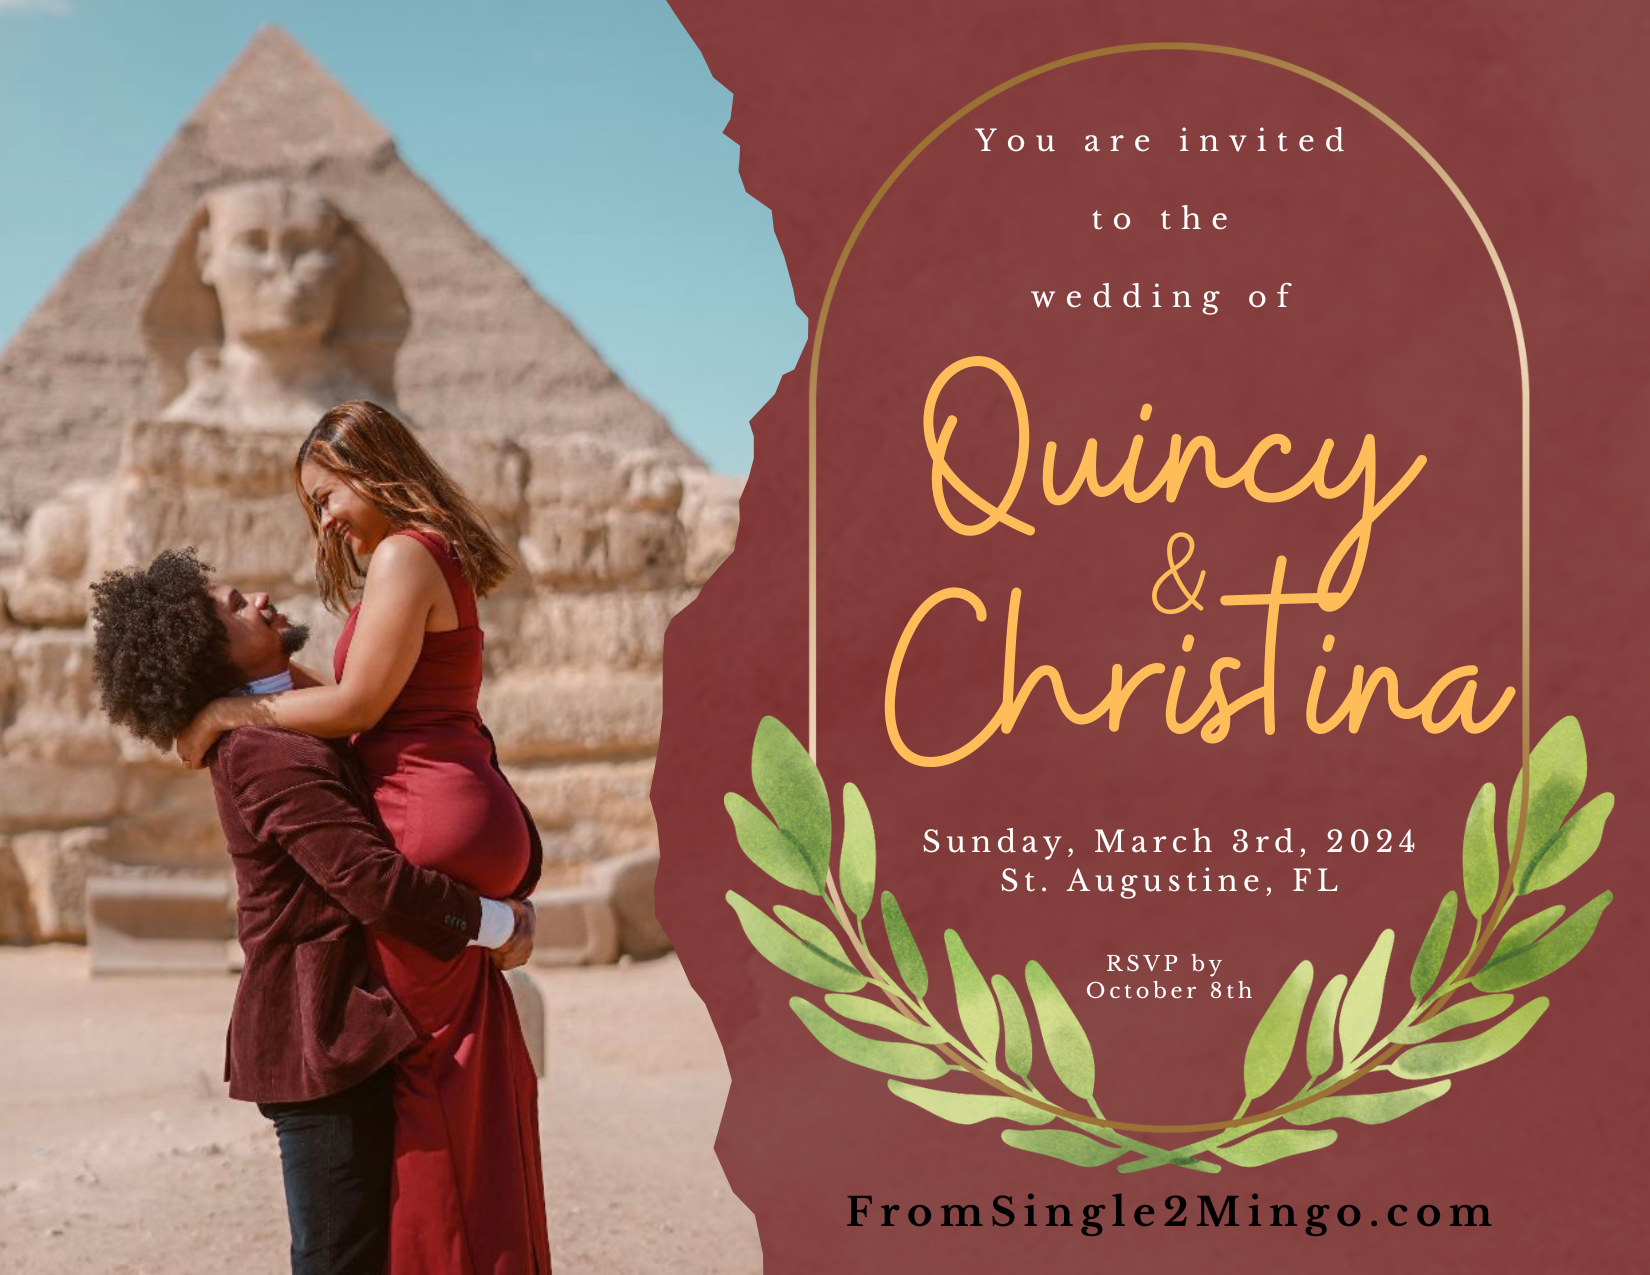 The Wedding Website of Christina Edwards and Quincy Mingo